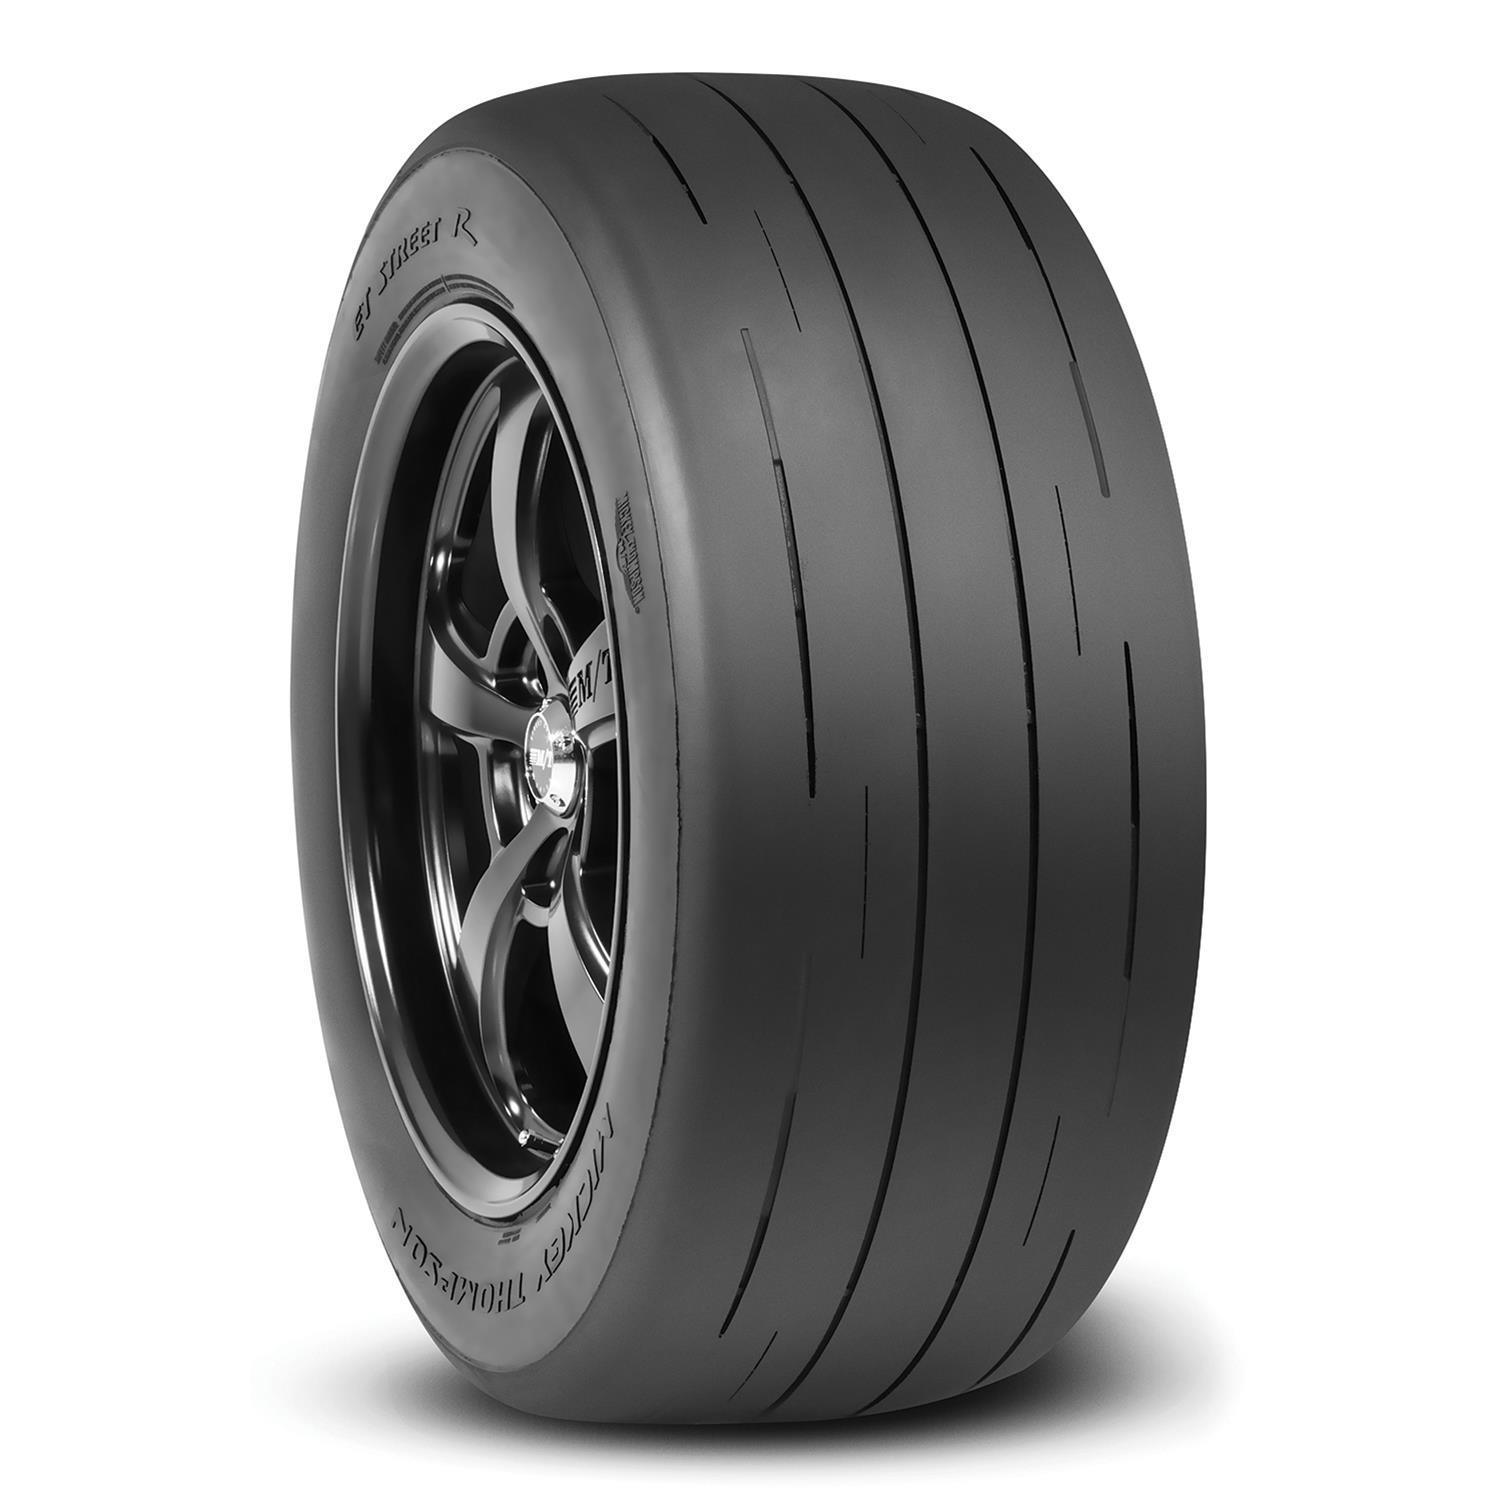 P275/60R15 ET Street R Tire - Burlile Performance Products